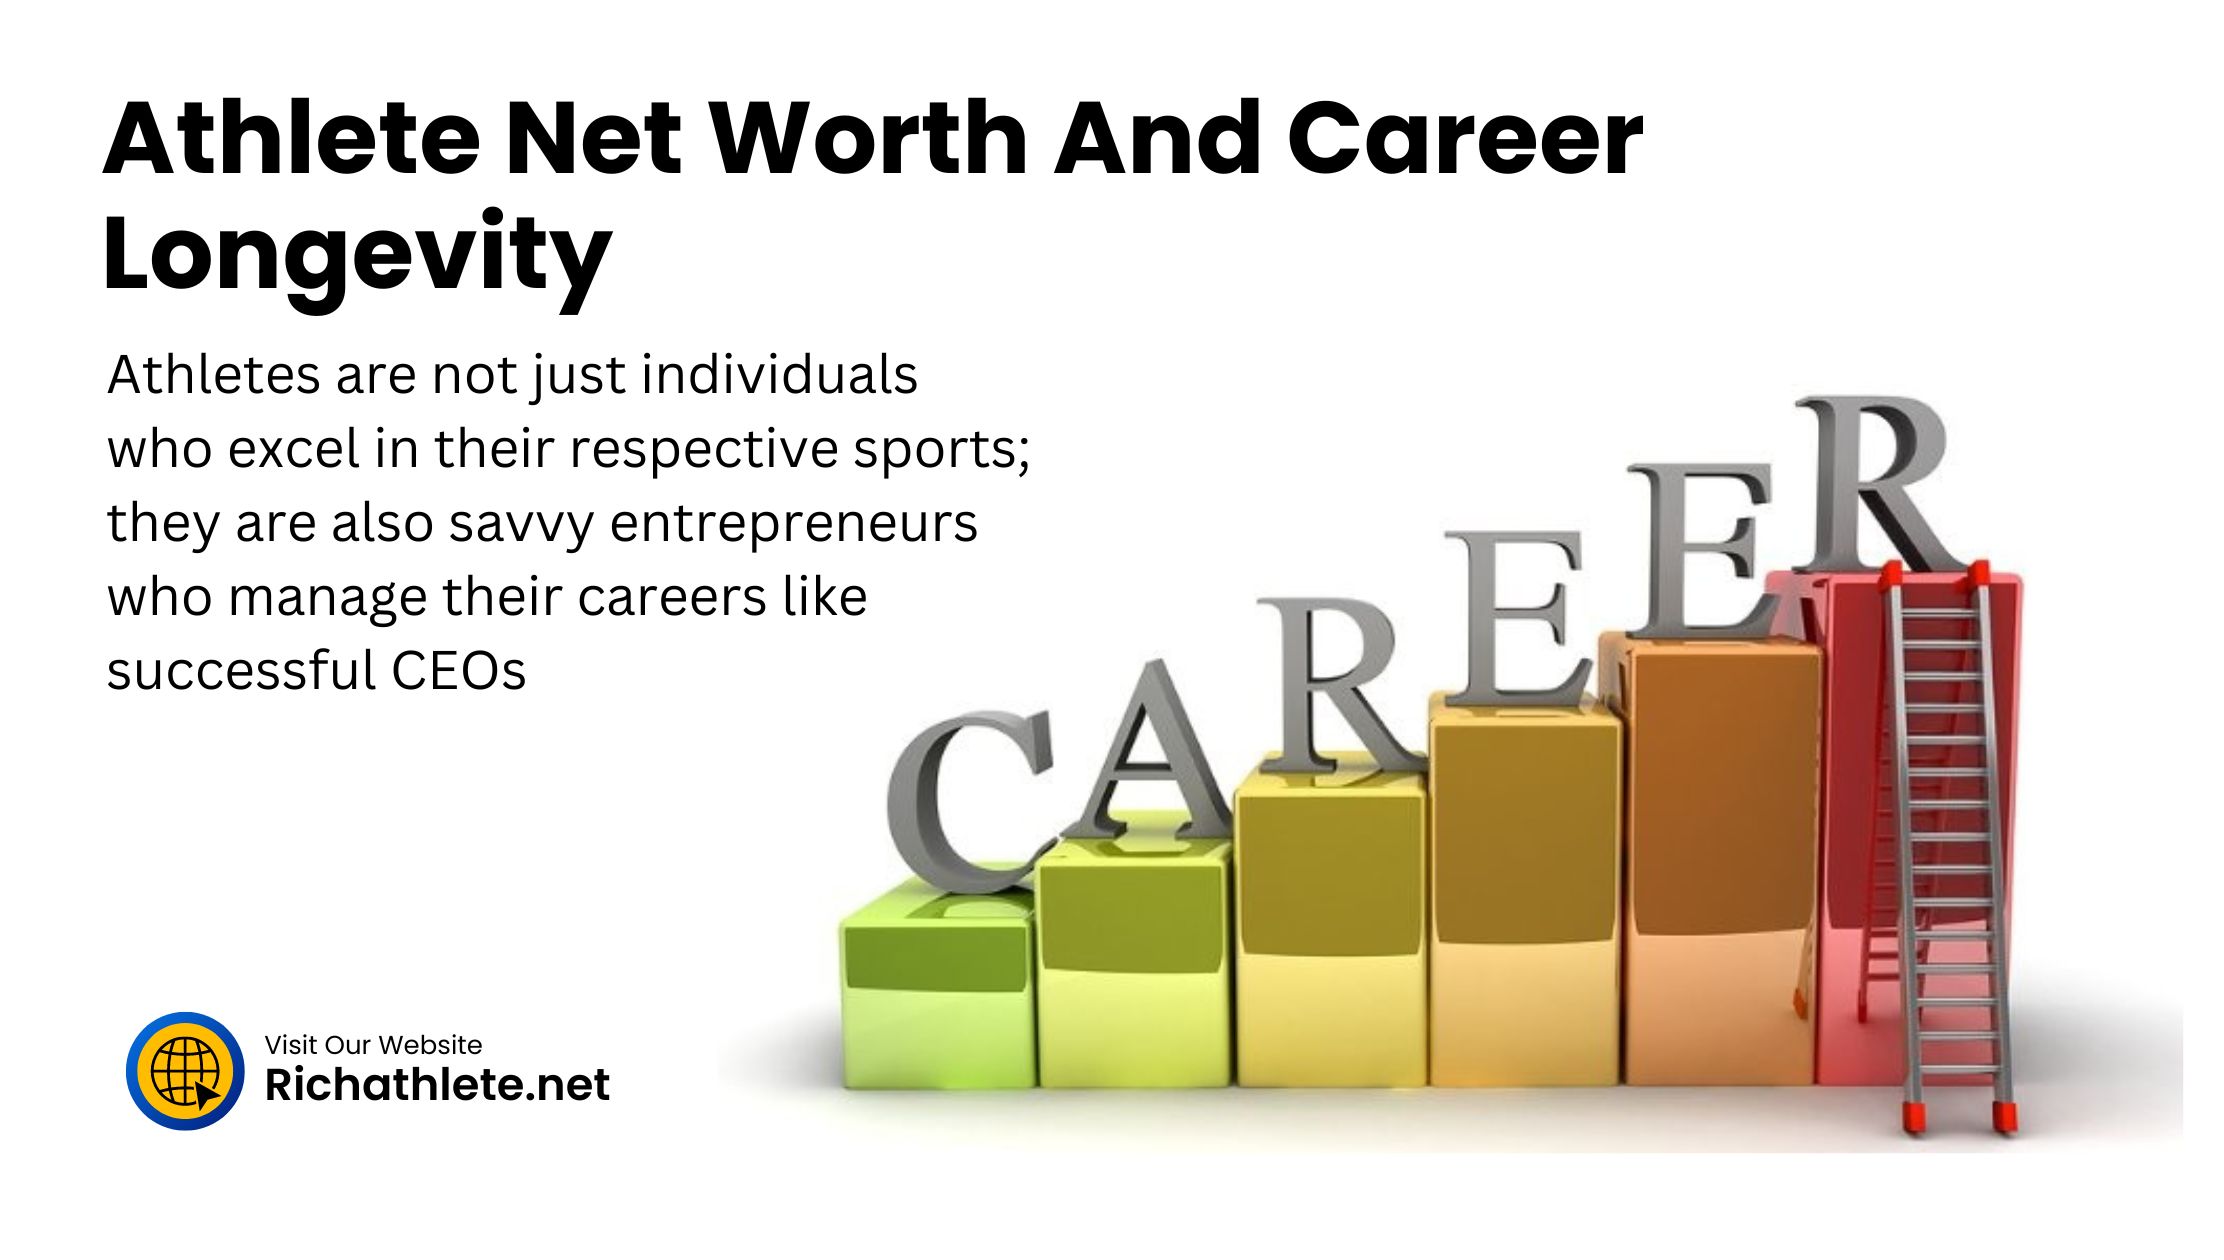 Athlete Net Worth And Career Longevity